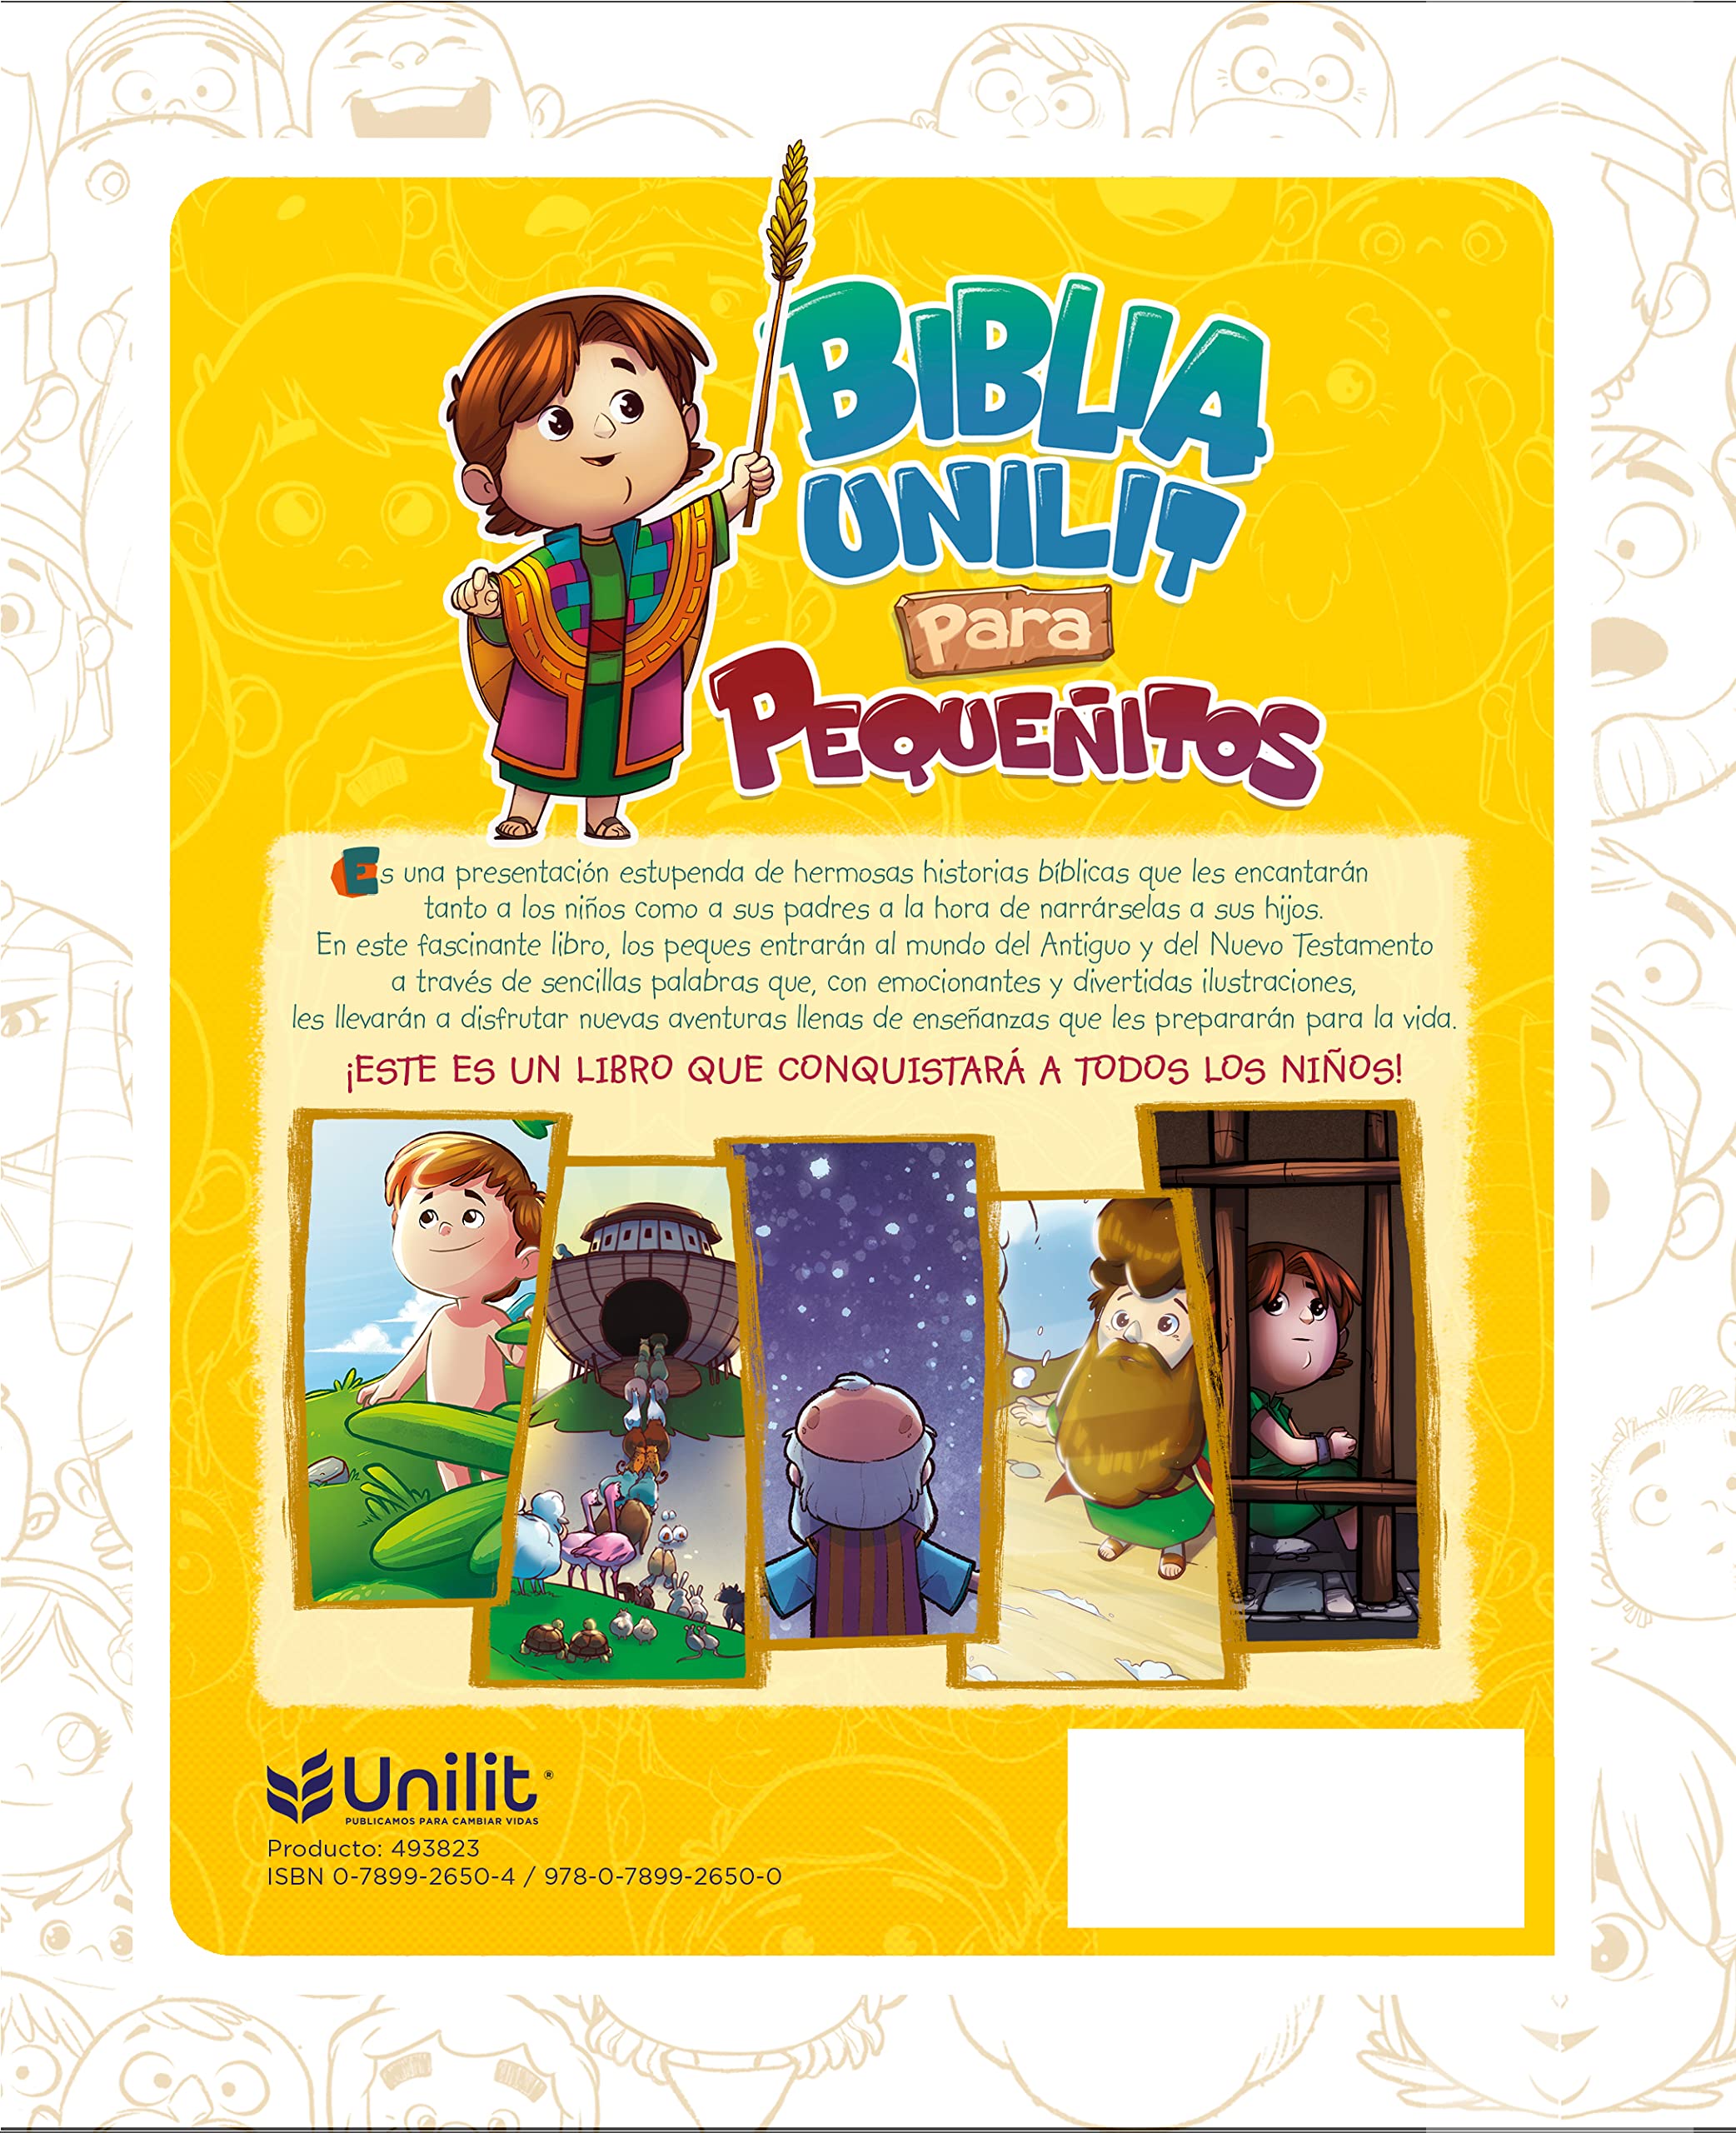 Biblia Unilit para pequeñitos (Spanish Edition)